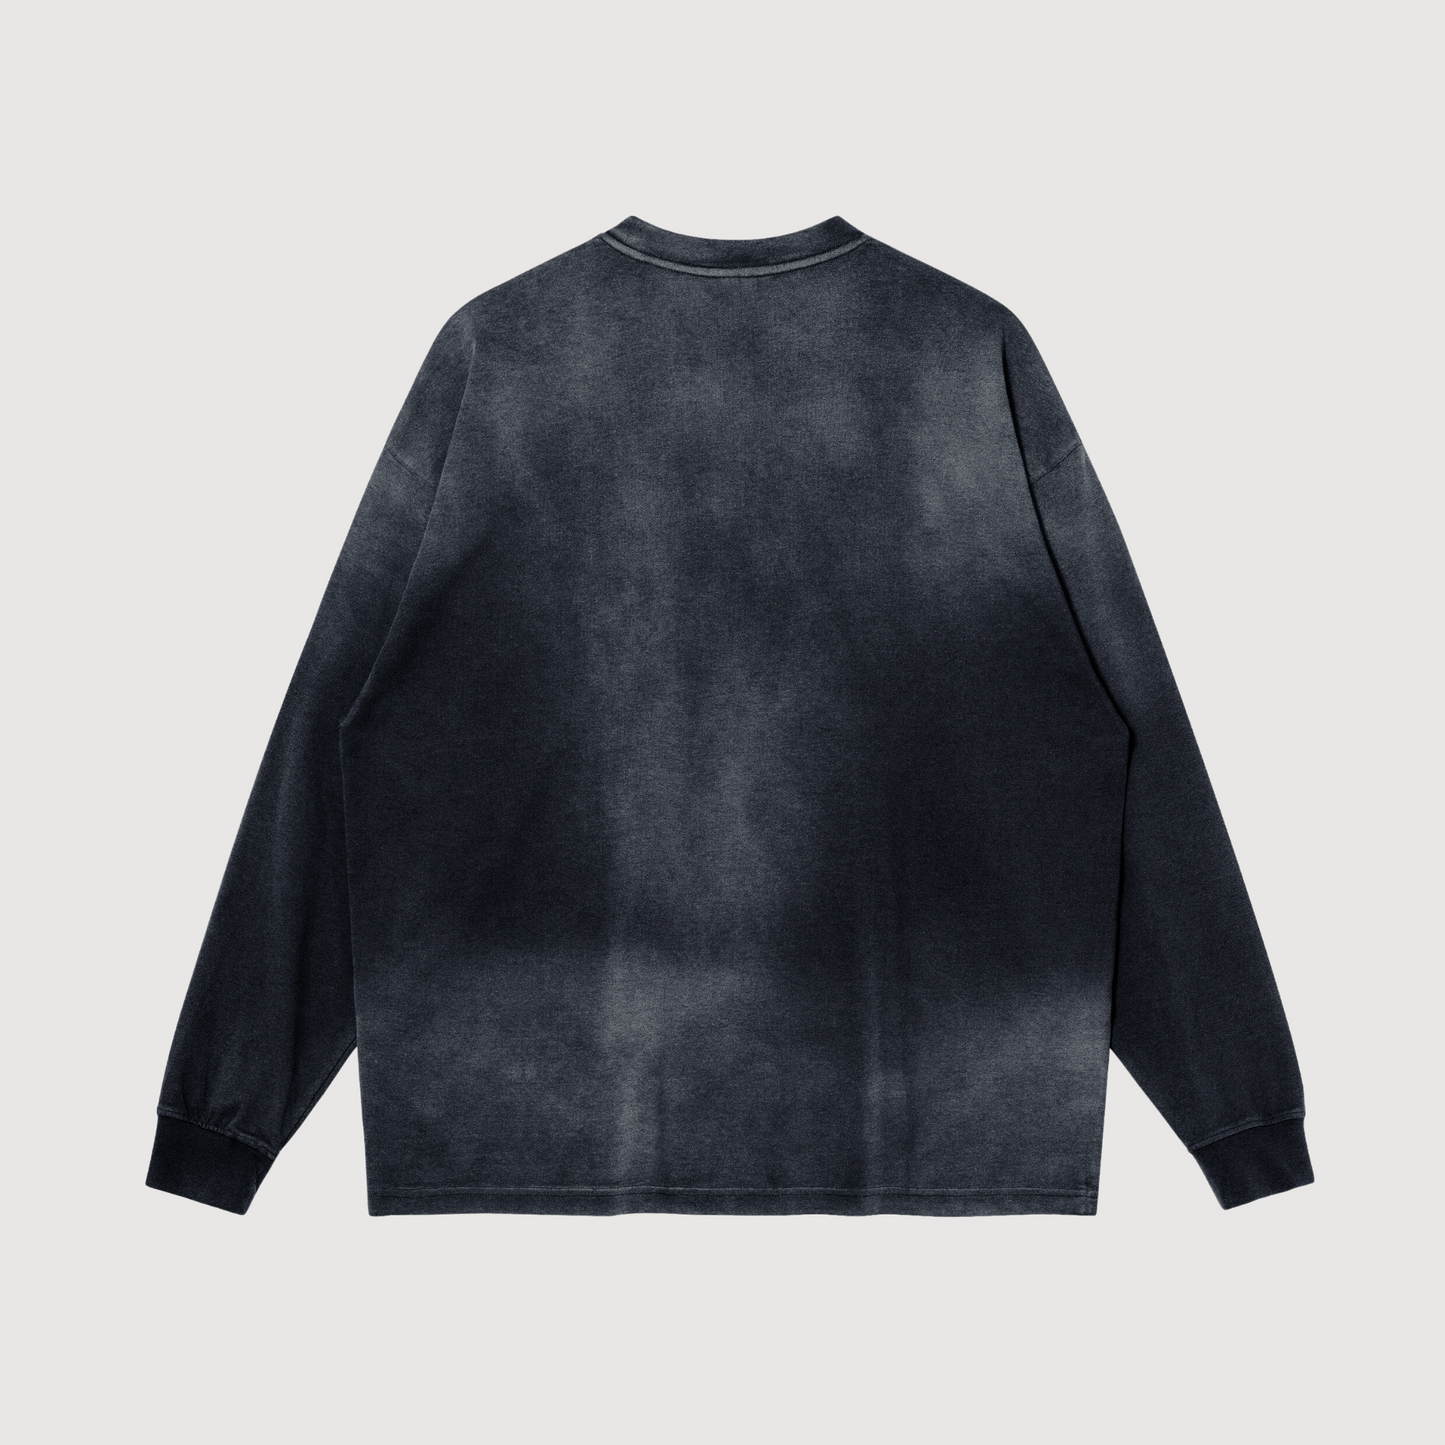 dyed black crewneck sweatshirt oversized drop shoulder fit of luxury streetwear